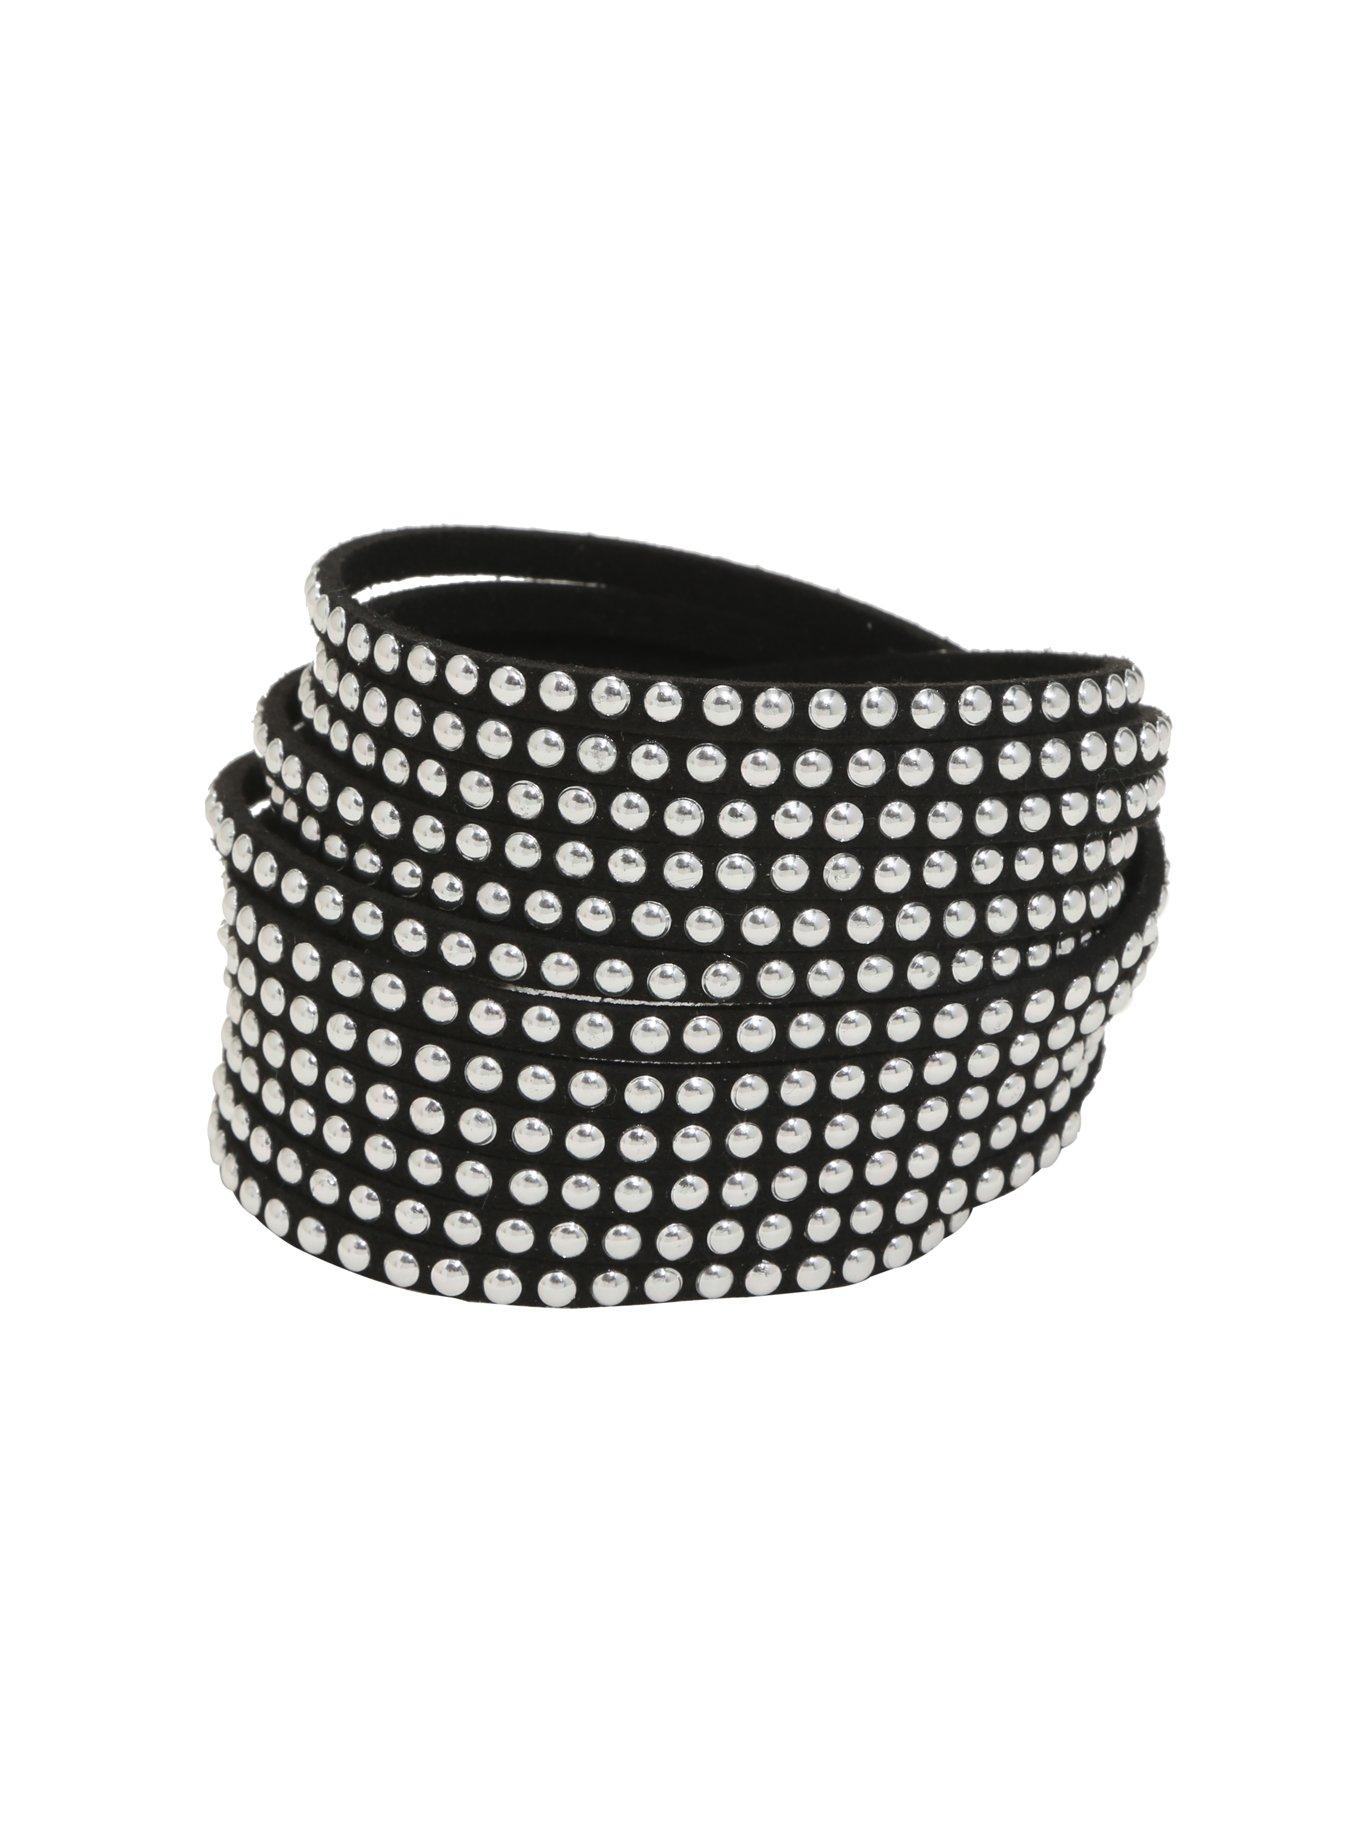 Blackheart Studded Wrap Bracelet, , hi-res